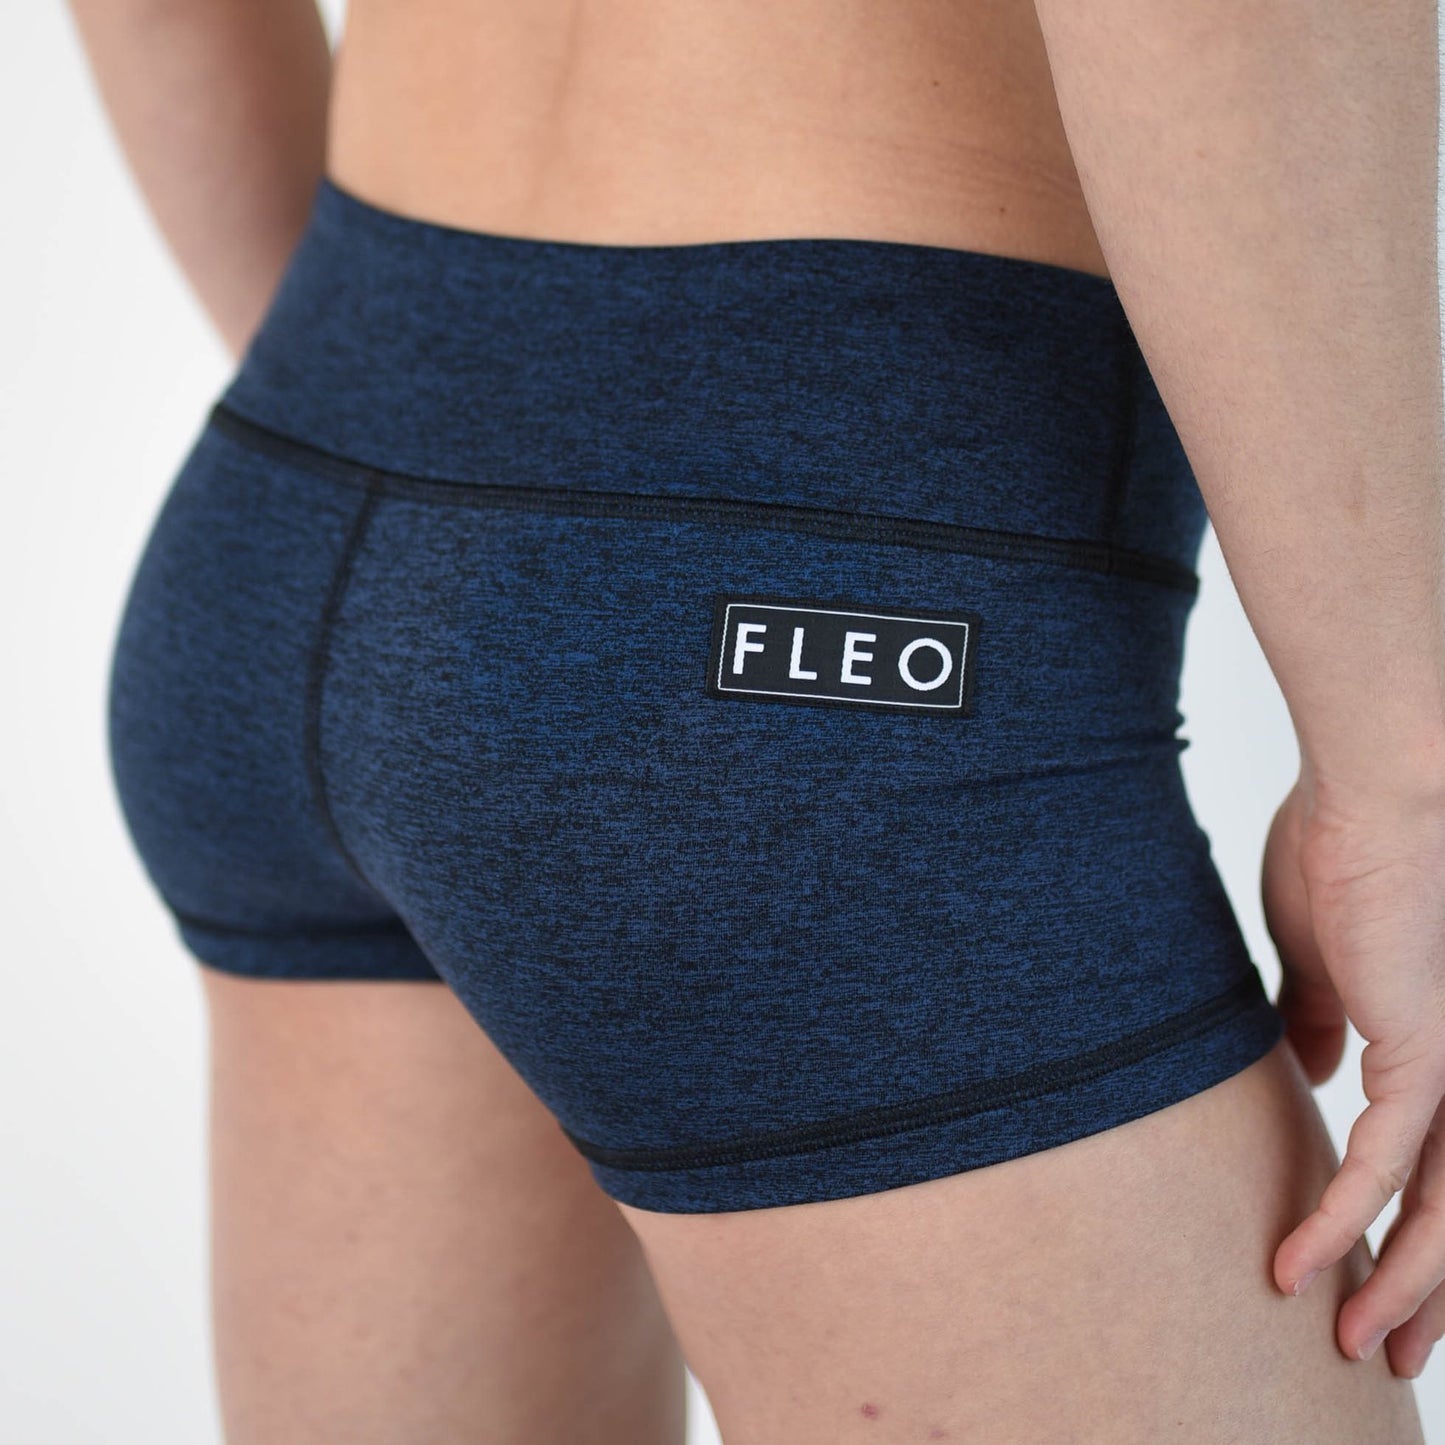 FLEO Half Moon Shorts (Original) - 9 for 9